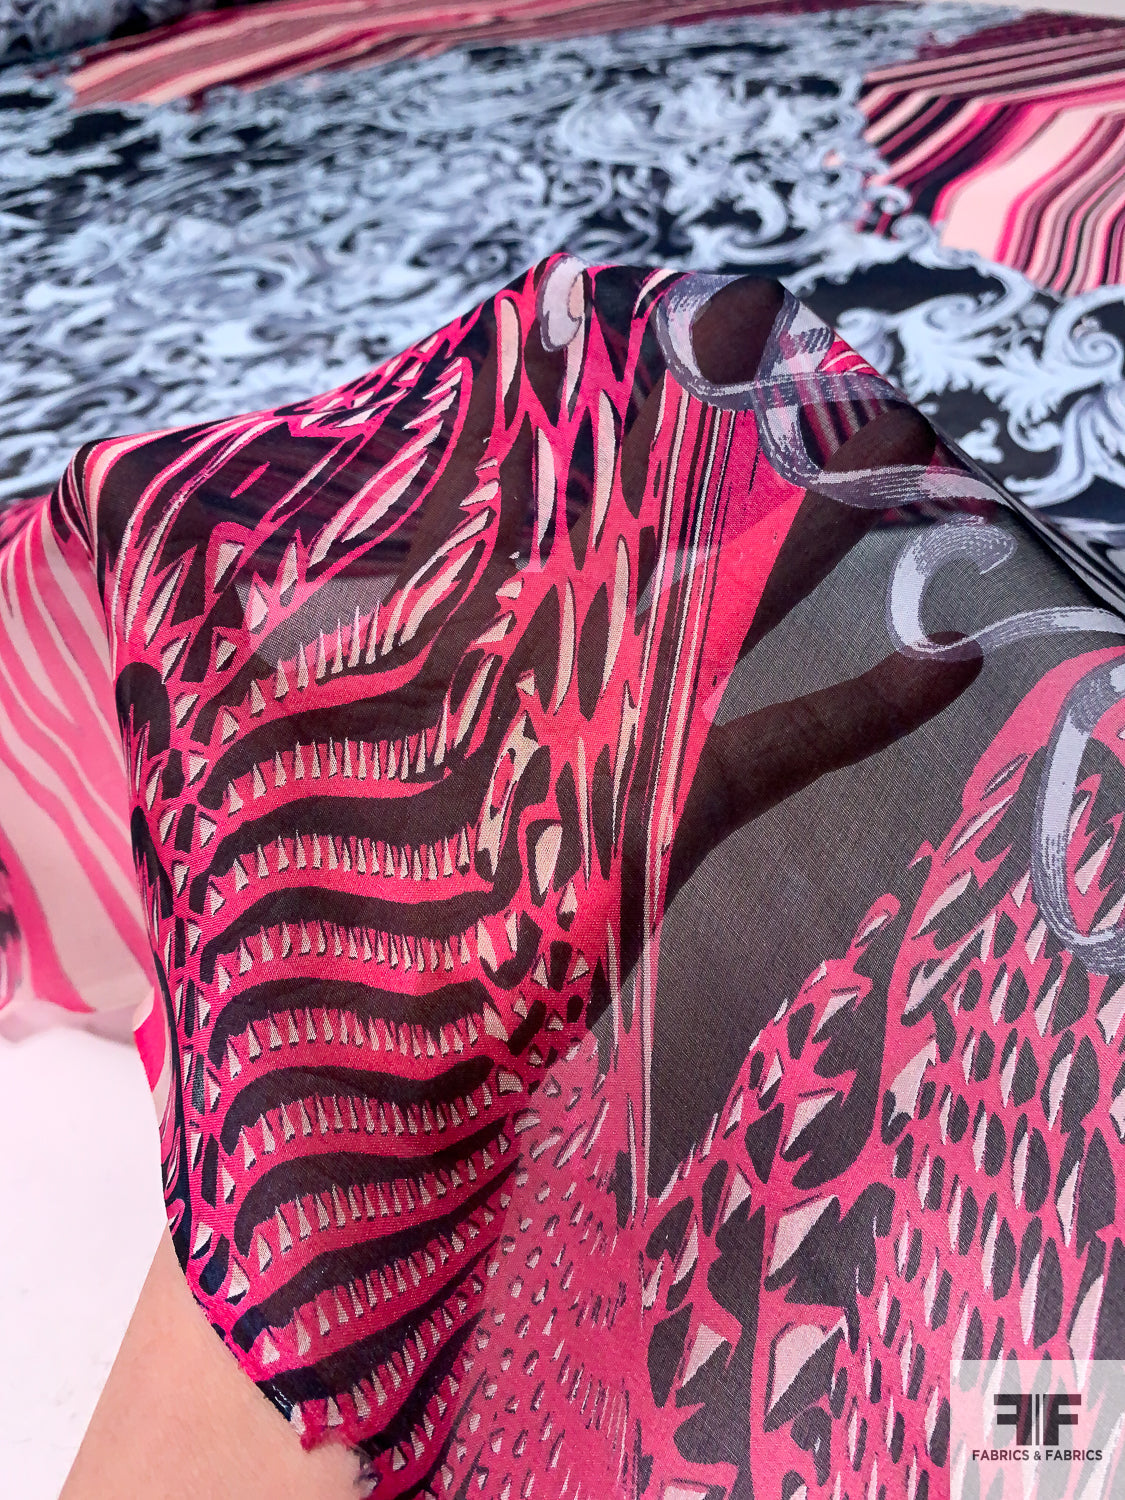 Striped and Ornate Regal Printed Silk Chiffon - Hot Pink / Pink / Black / Sky Blue / Navy